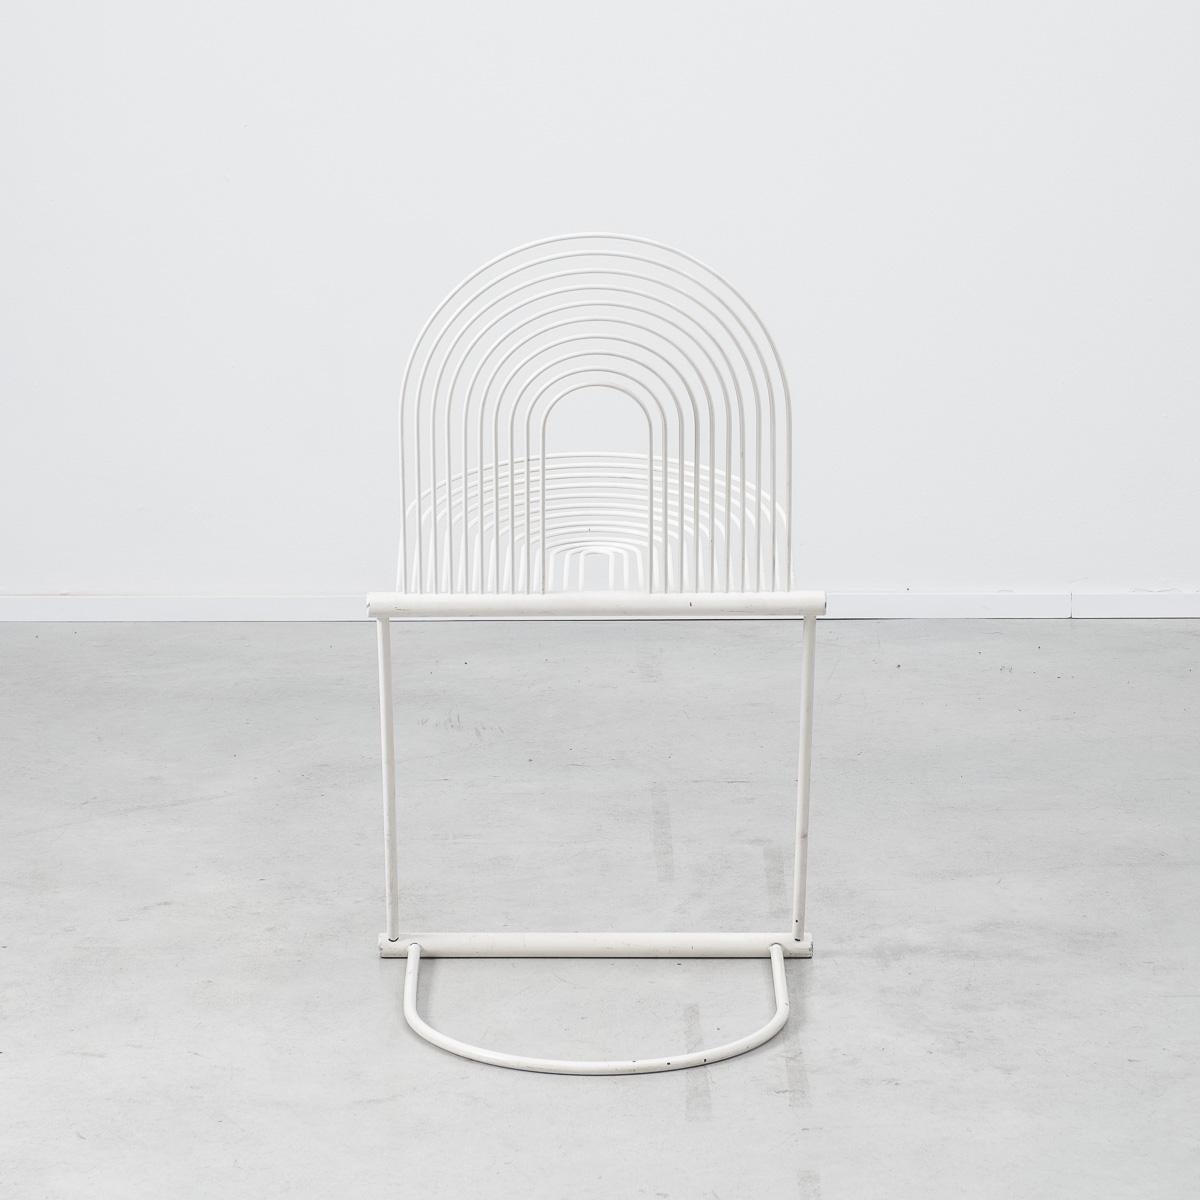 Contour heaven. Swing chair designed by Jutta & Herbert Ohl for Rosenthal Lübke, Germany 1982. Cantilevered design, powder-coated steel.

